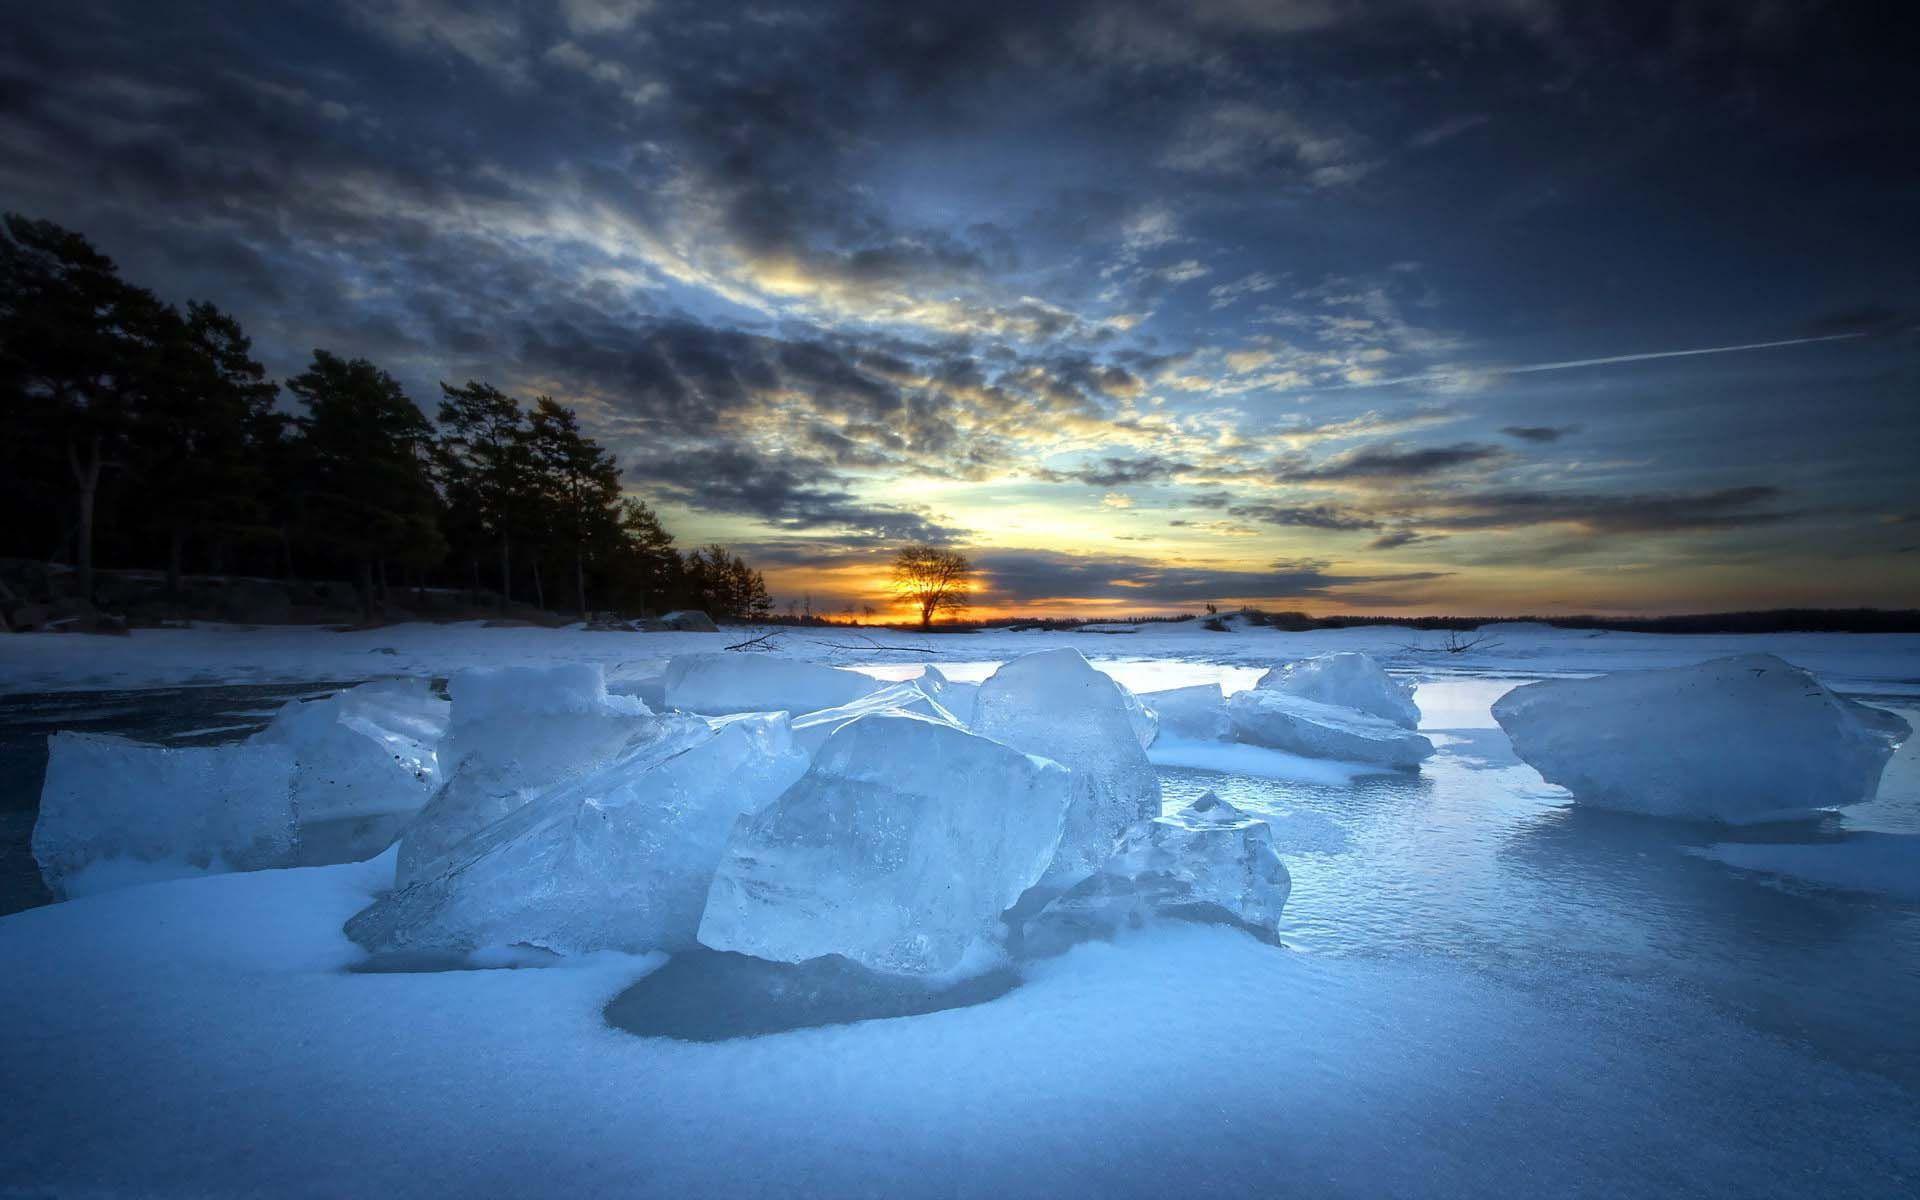 Frozen River. HD Nature Wallpaper for Mobile and Desktop